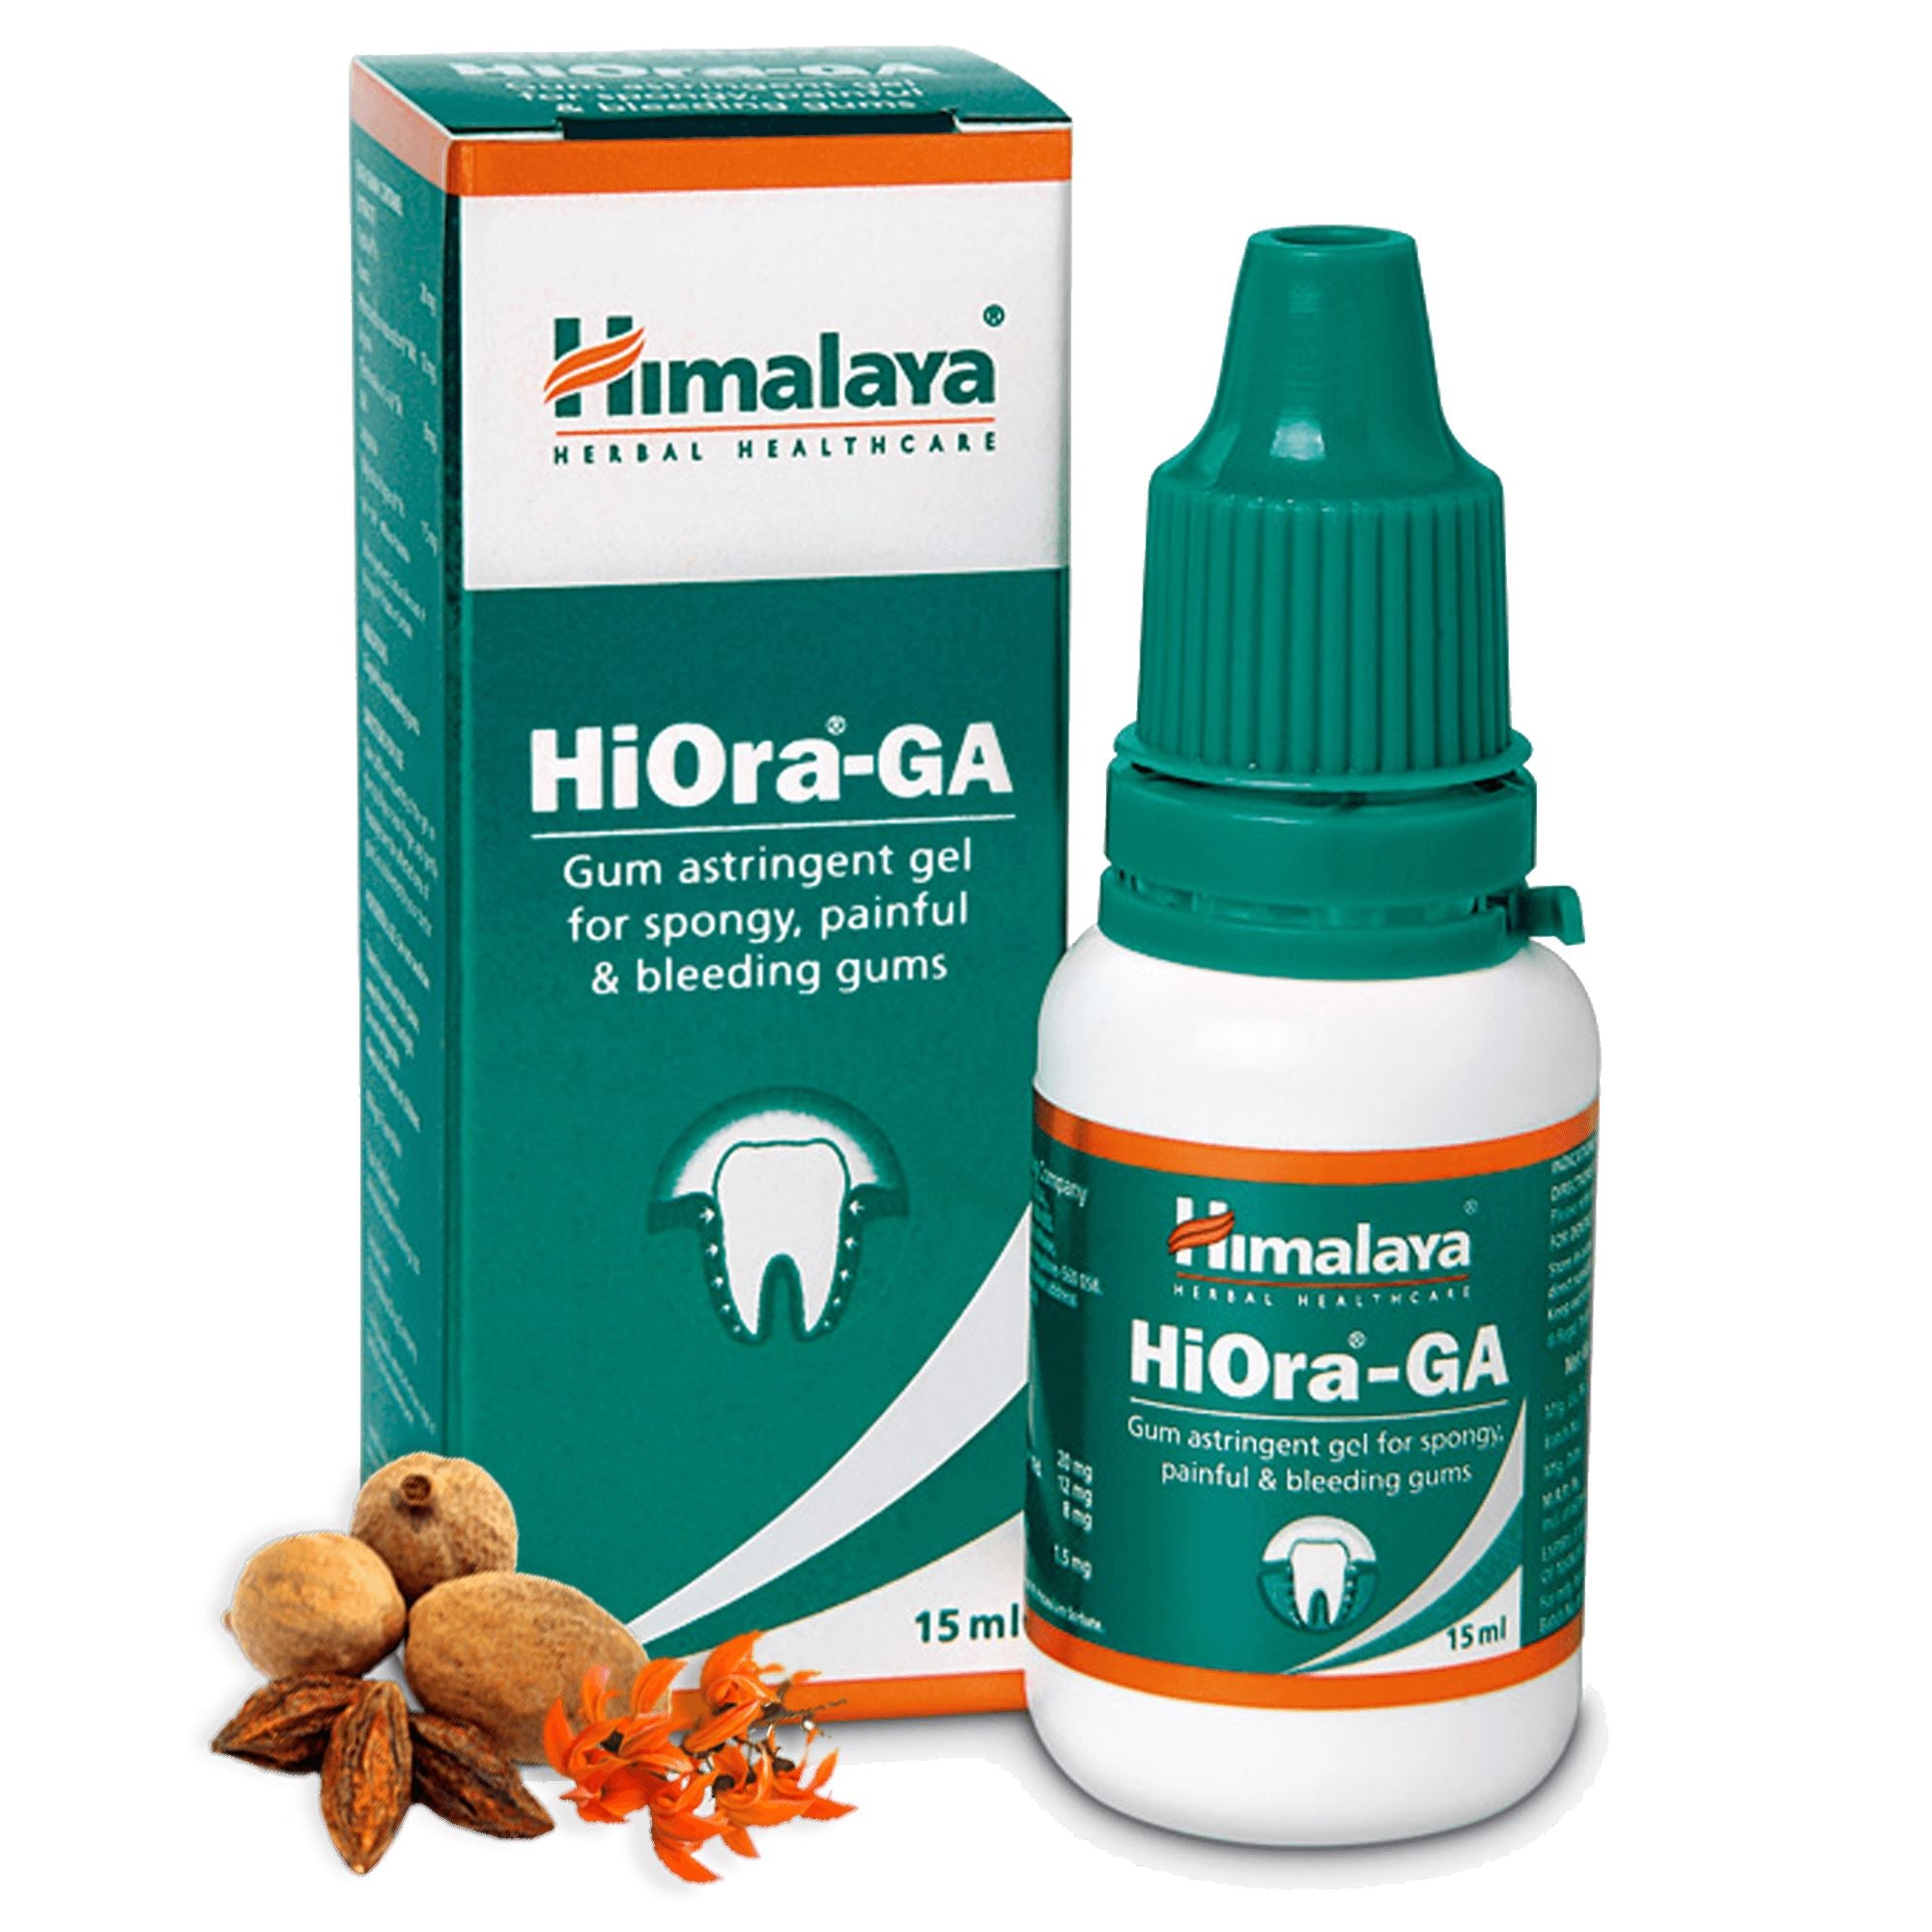 Himalaya Hiora-GA Gel - Gum astringent gel for spongy, painful and bleeding gums